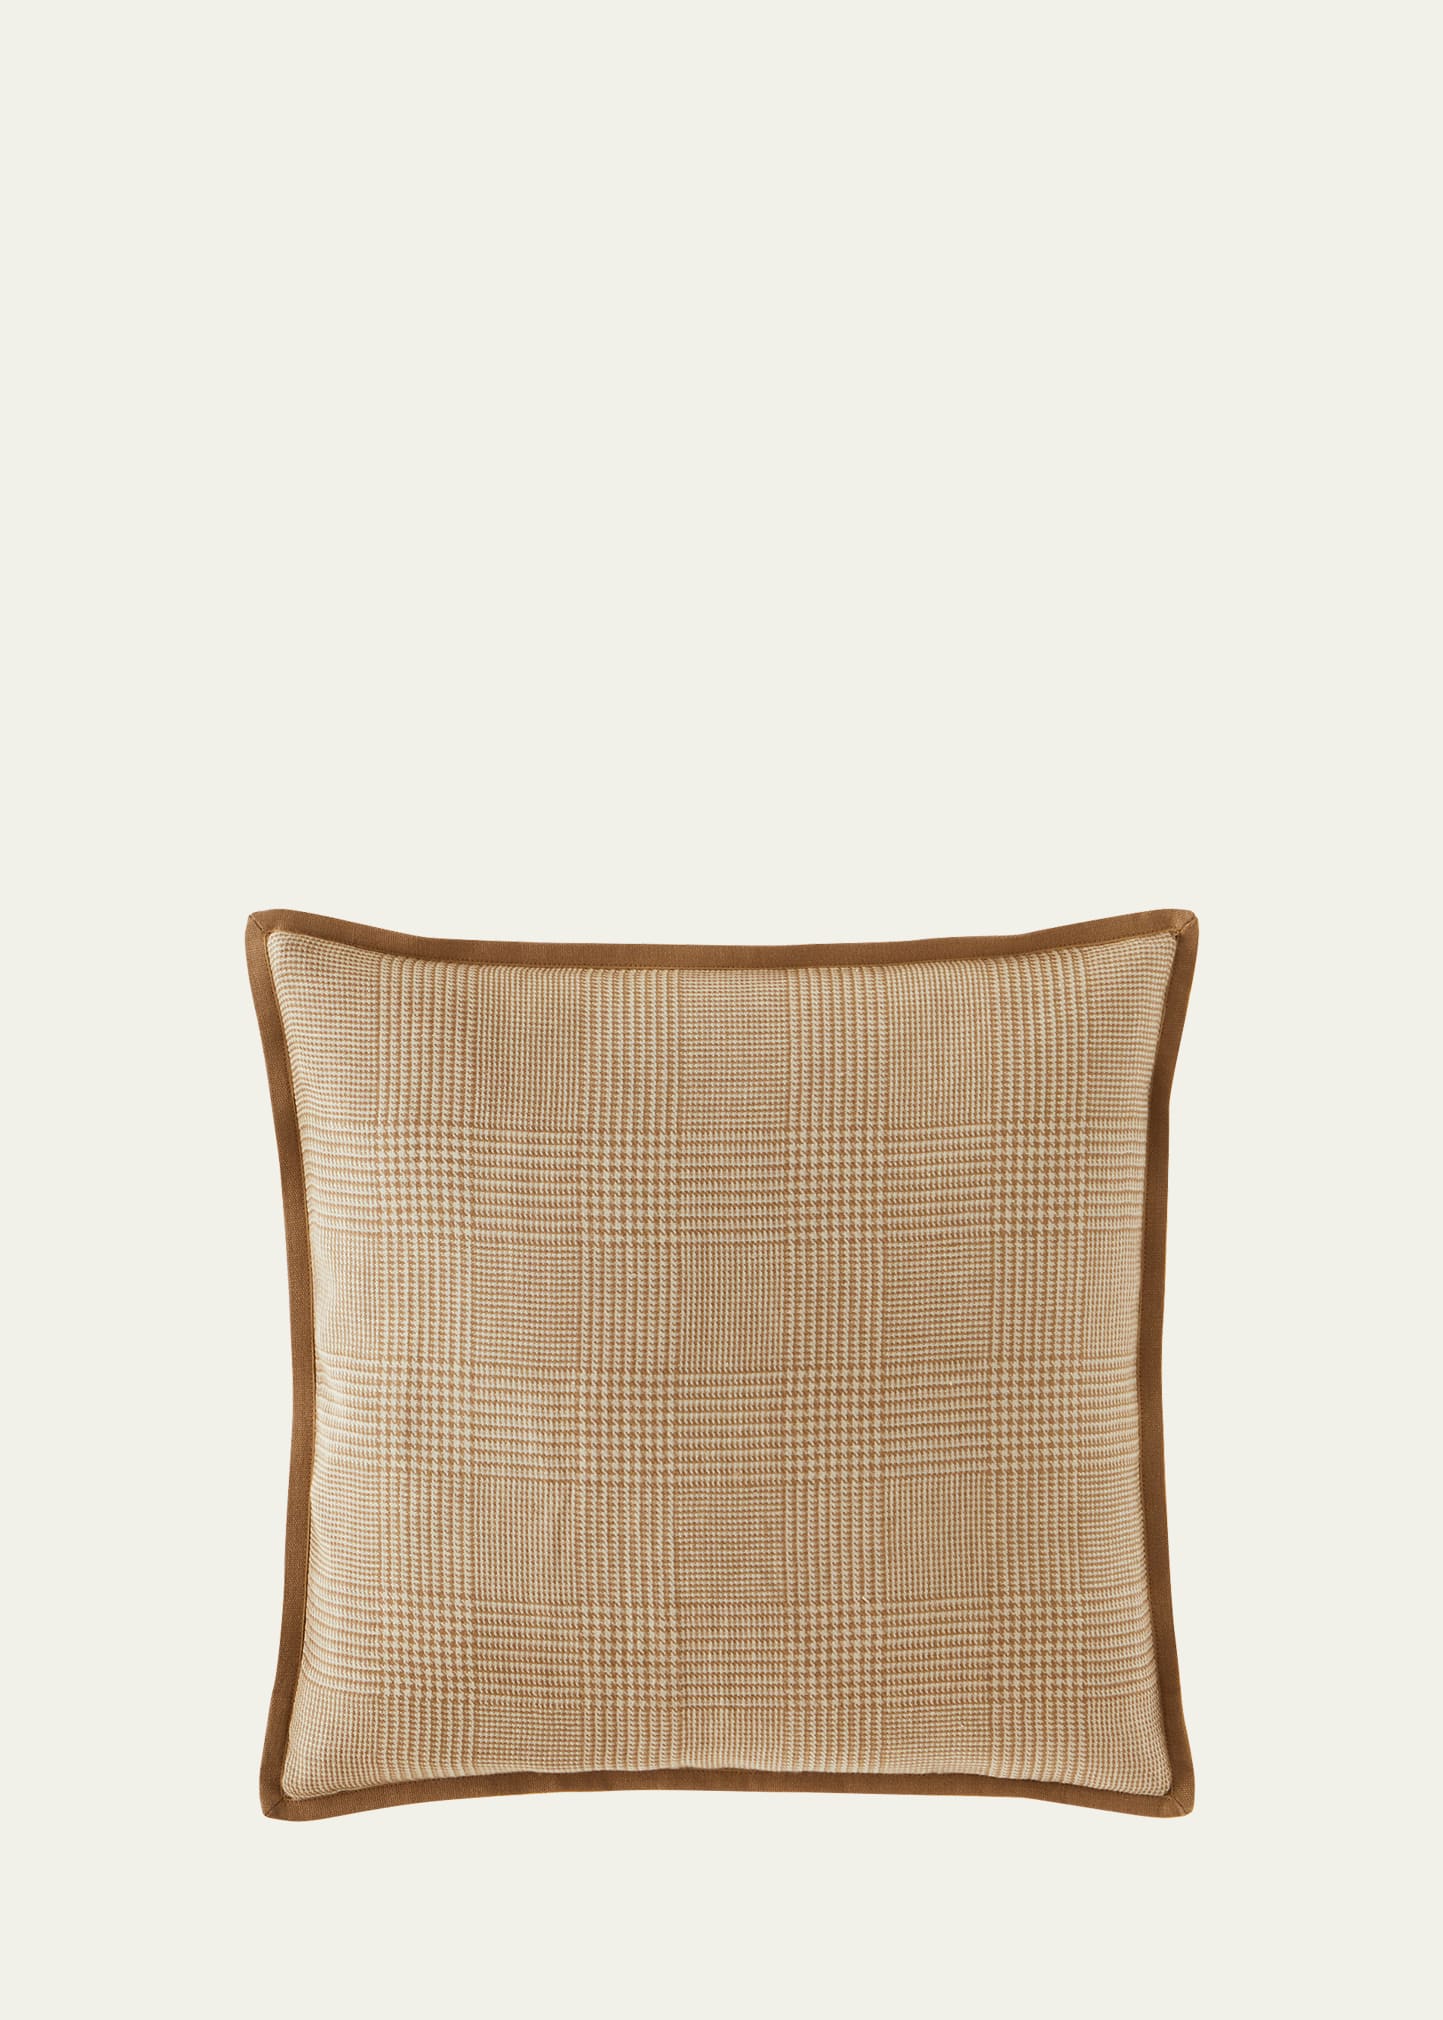 Fenmore 20"Sq. Decorative Pillow